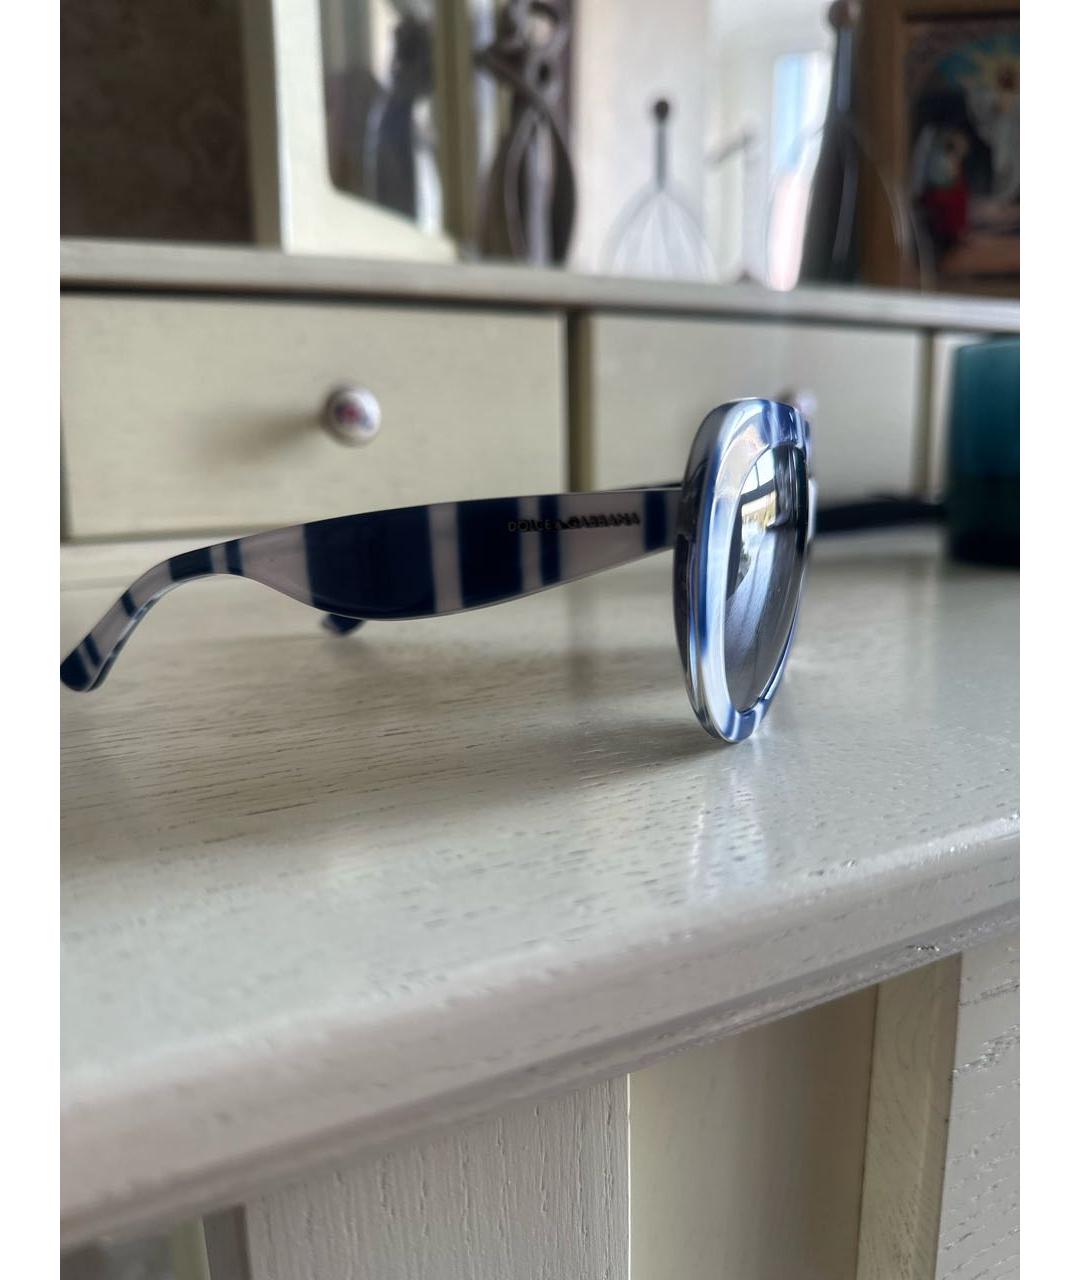 DOLCE&GABBANA Синие пластиковые солнцезащитные очки, фото 3